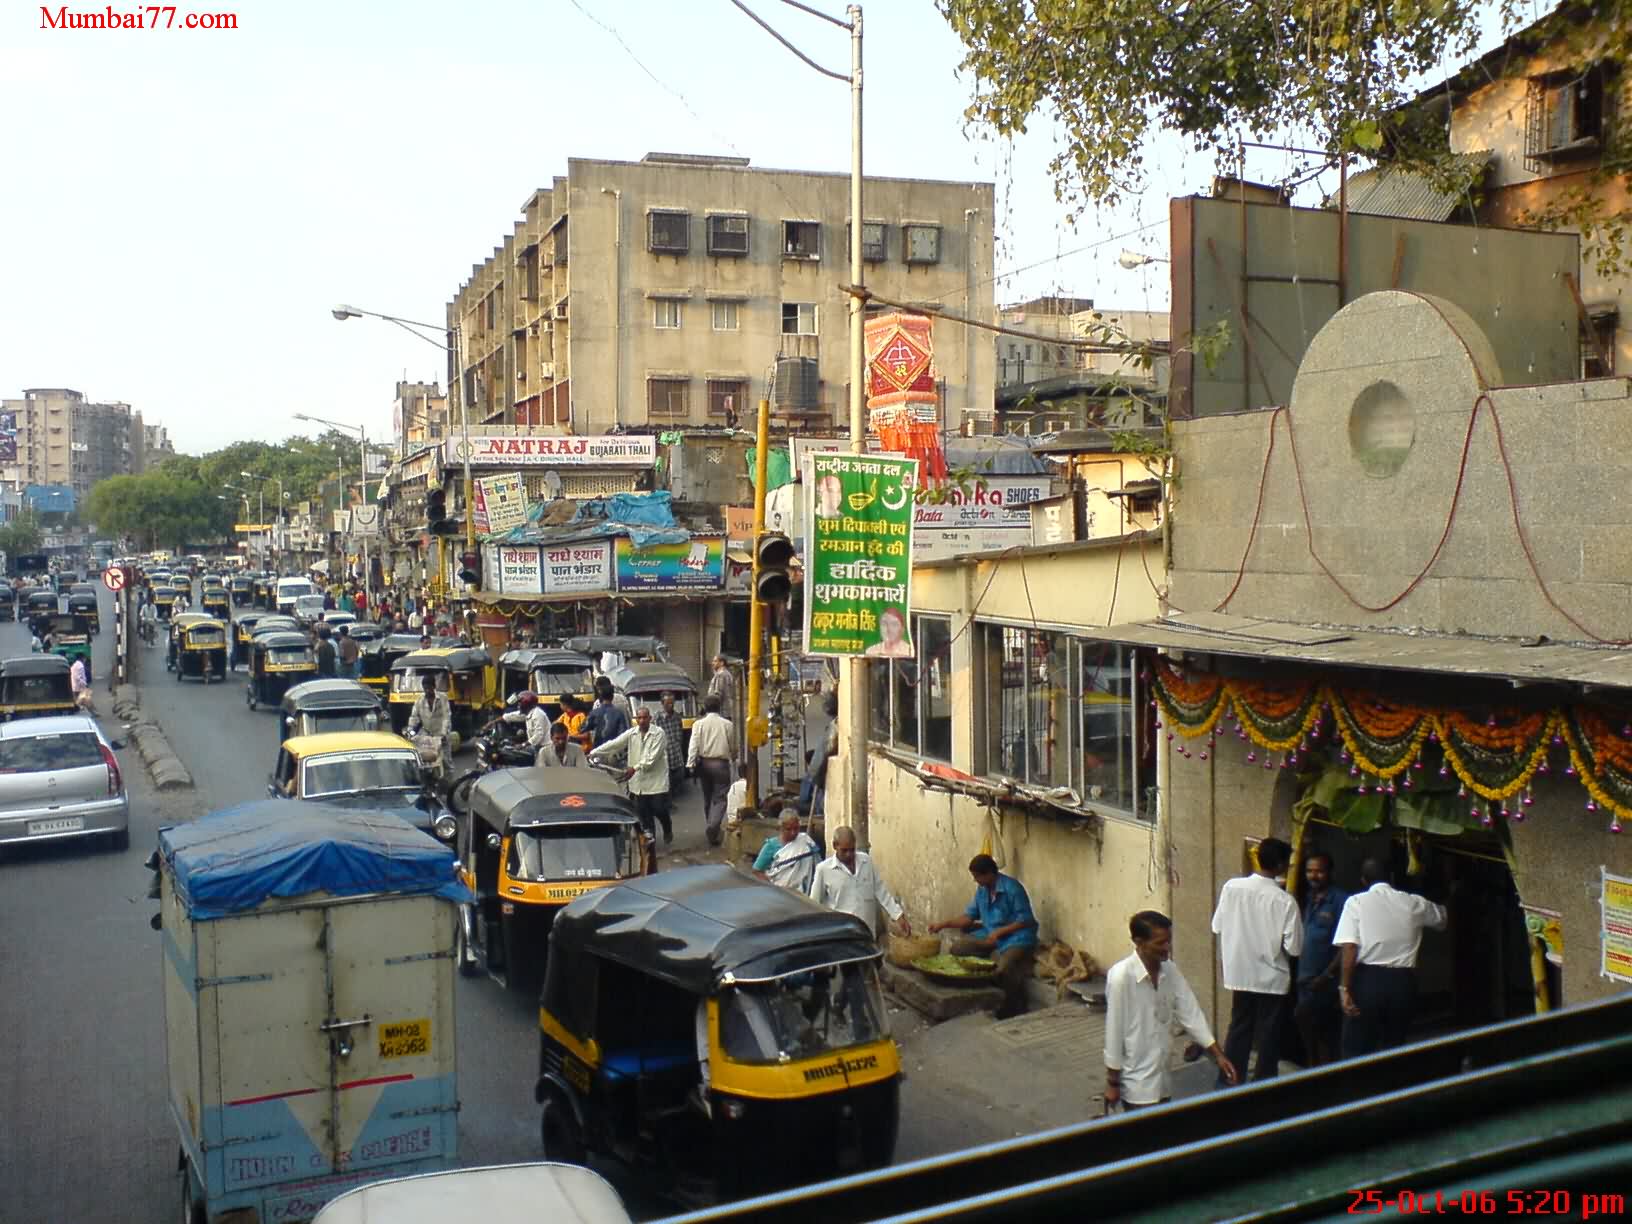 natraj market in mumbai